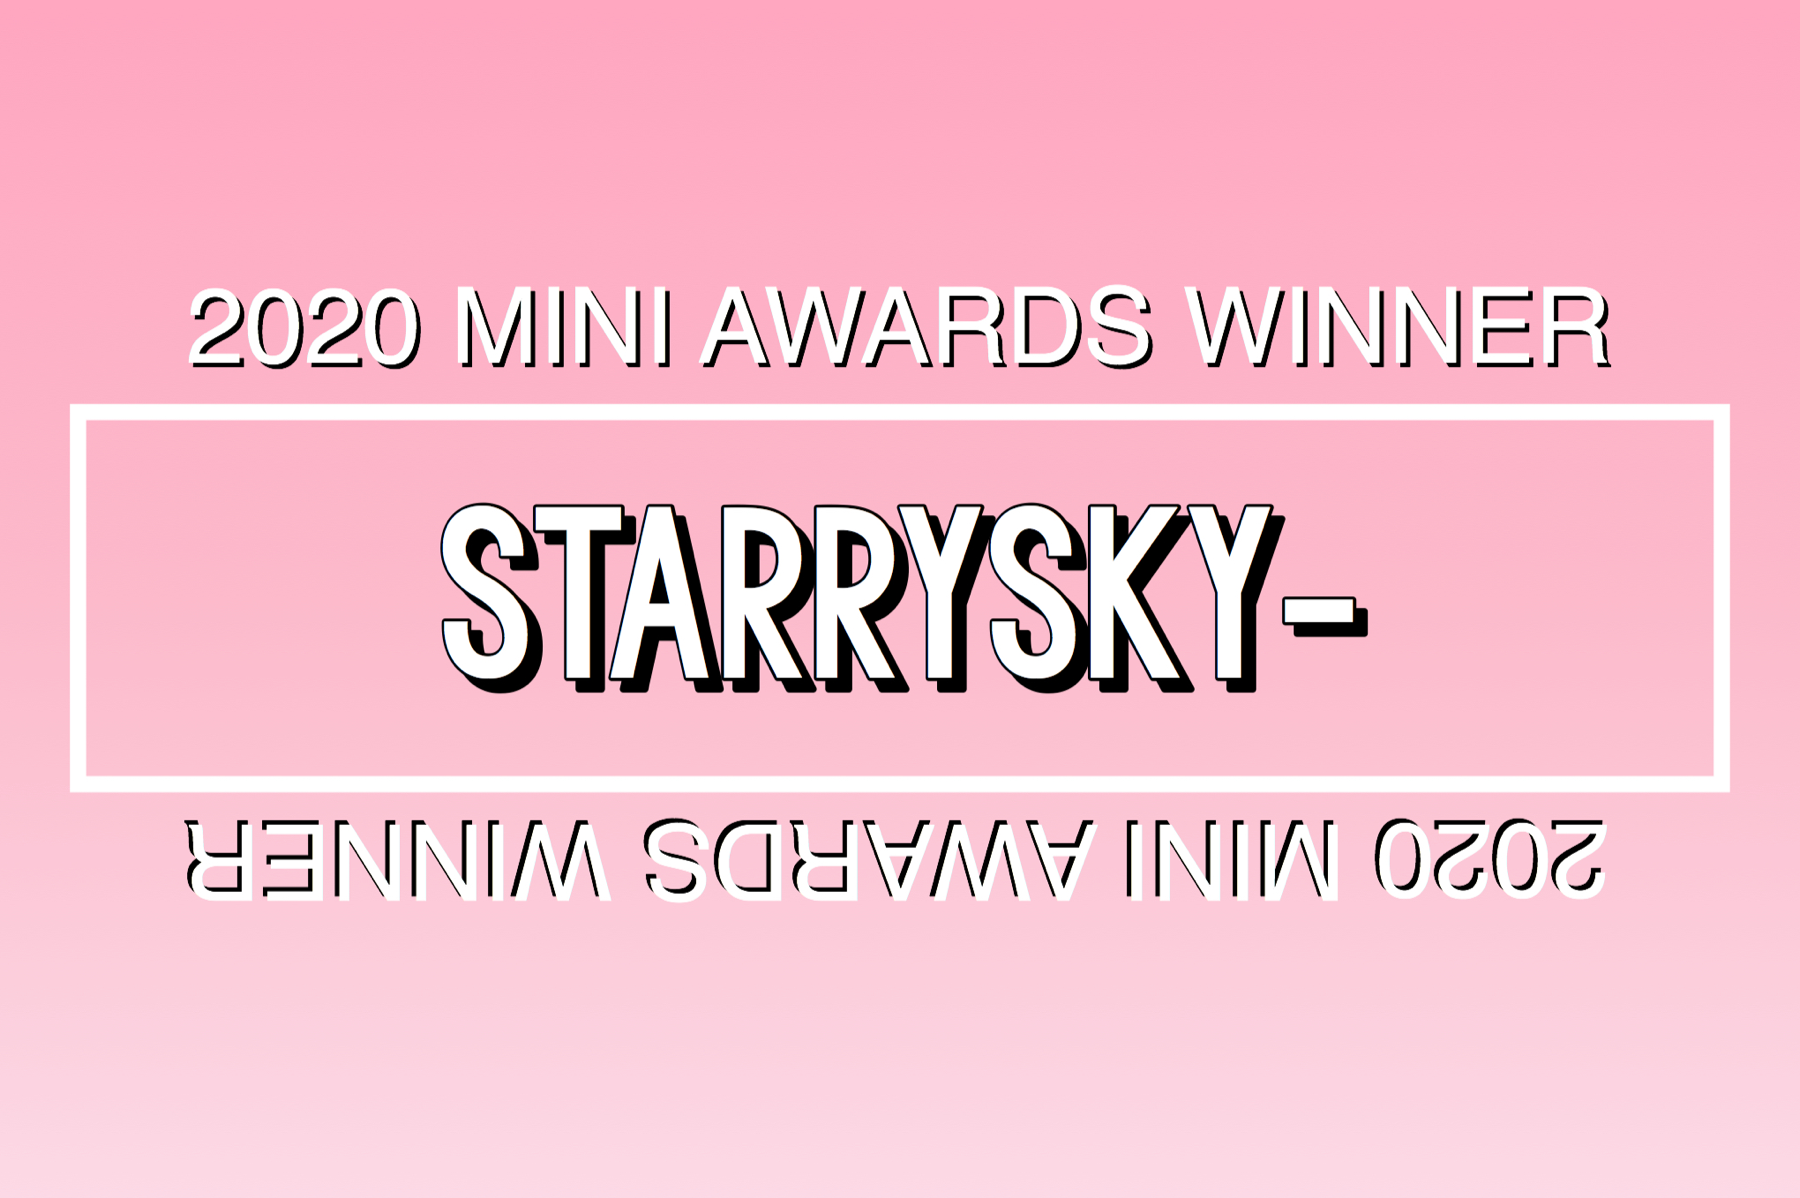 2020 Mini Awards Winner @Starrysky-